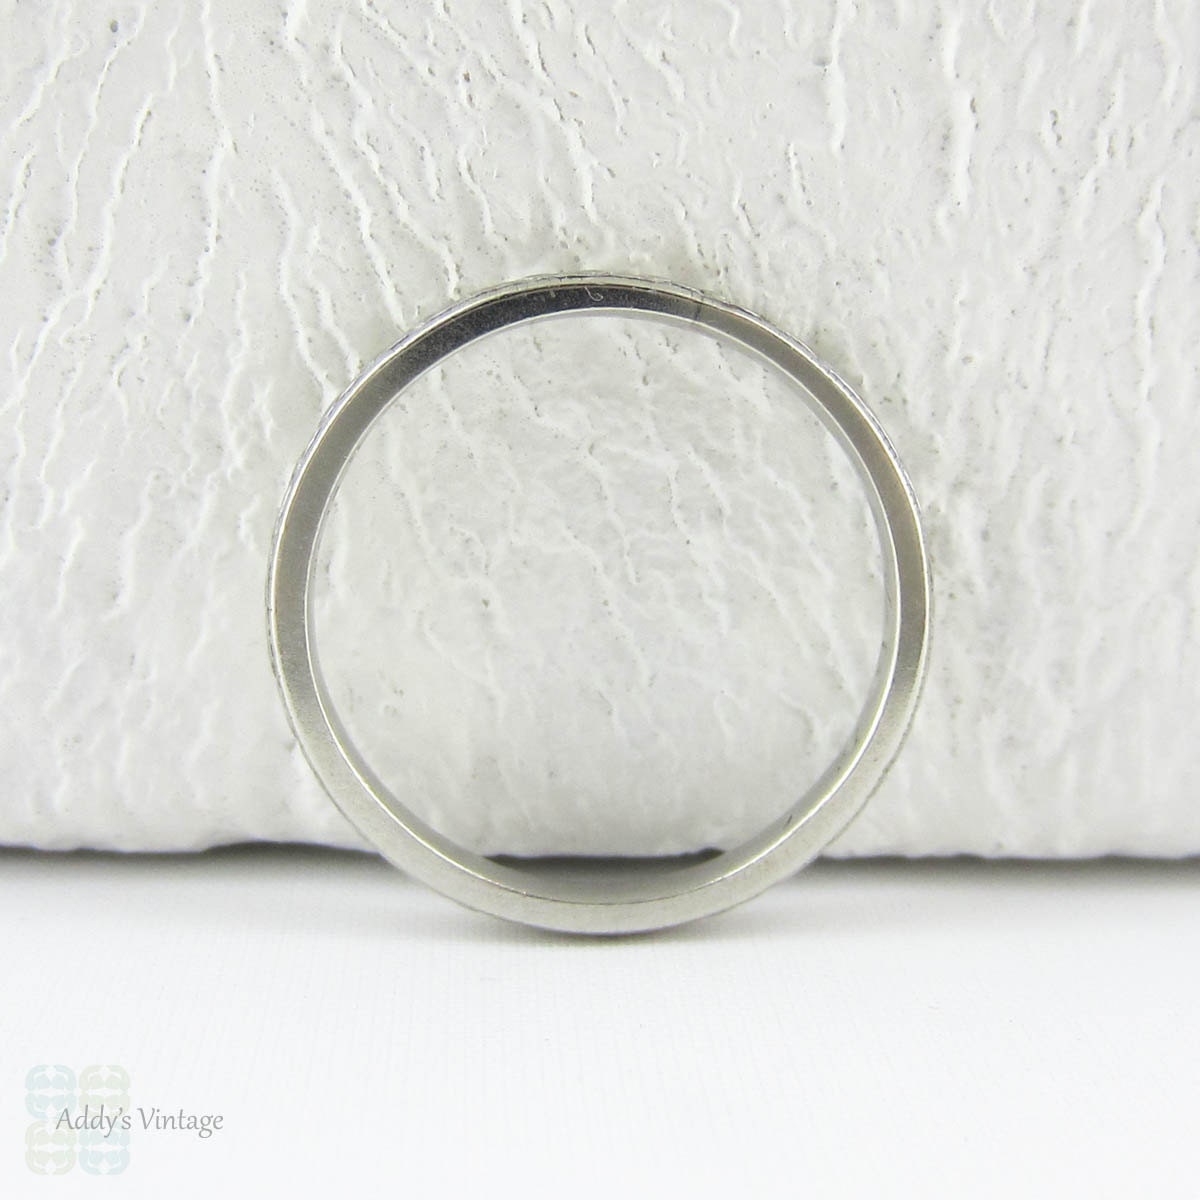 2mm floral milgrain wedding ring